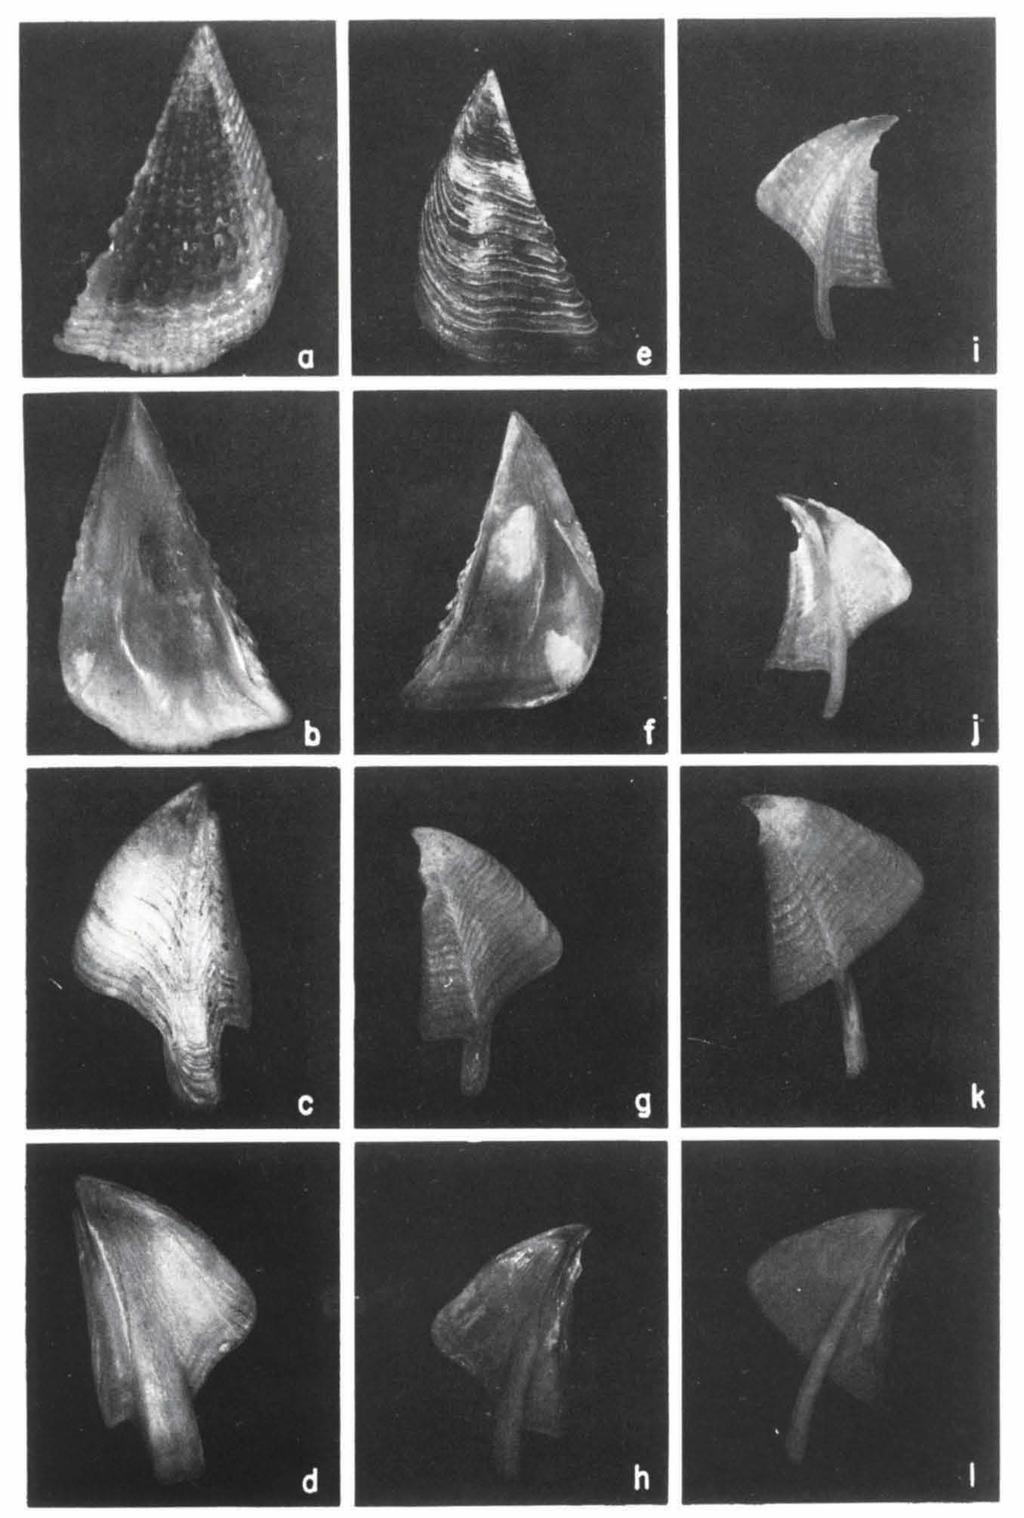 34 ZOOLOGISCHE VERHANDELINGEN 235 (1986) Fig. 9. Megabalanus occator (Darwin), a-d, external and internal views of opercular valves (Philippine Islands, USNM 52116).